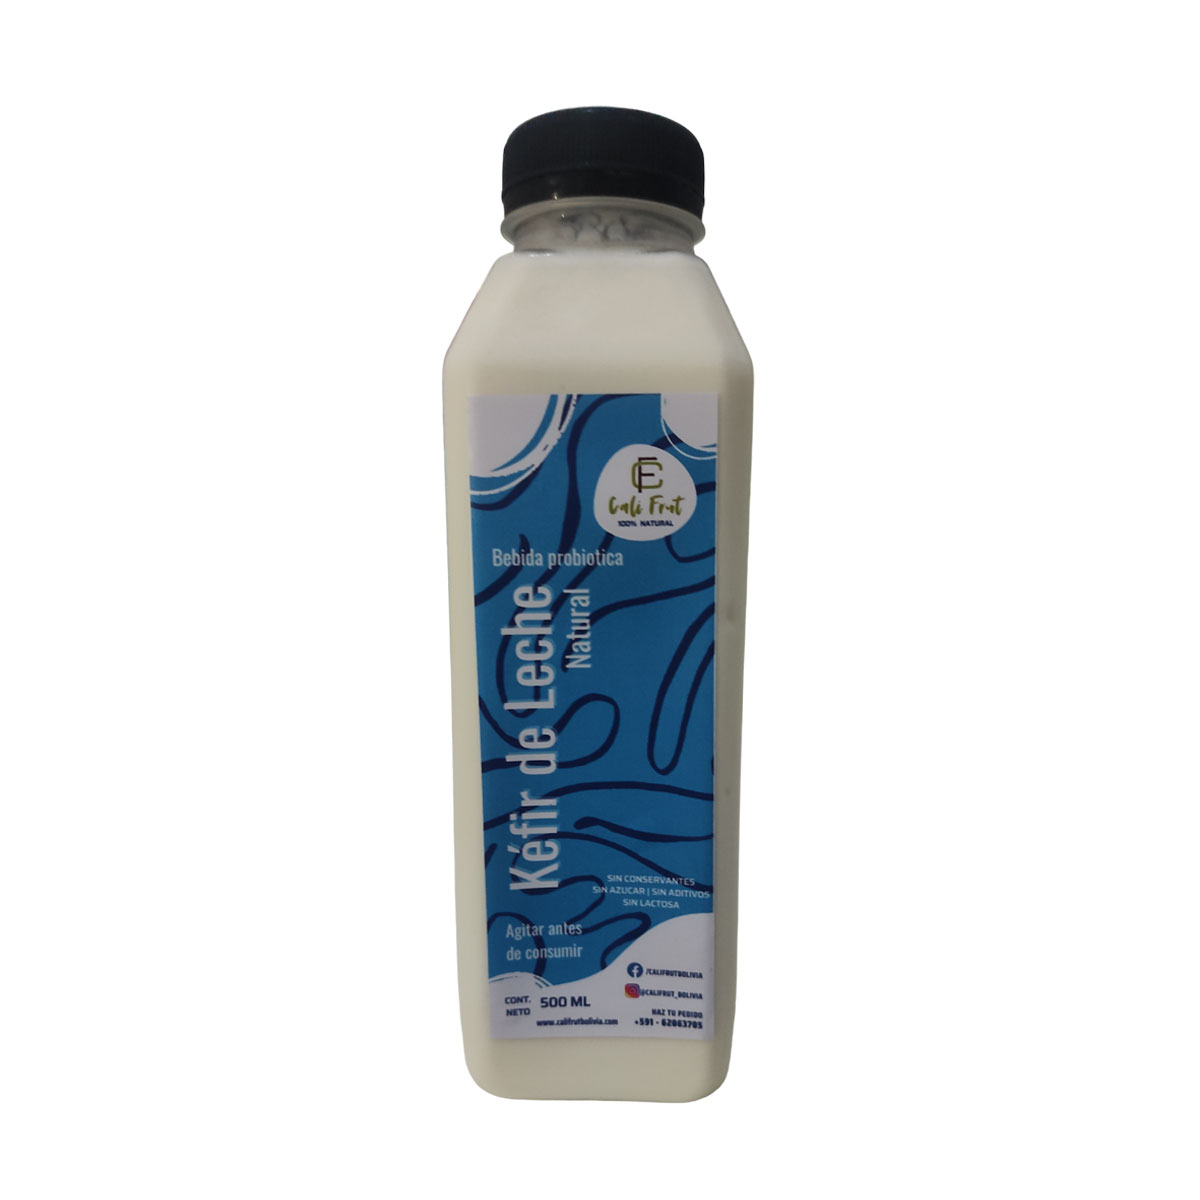 Kefir de leche Natural 500 ml artesanal sin Lactosa sin